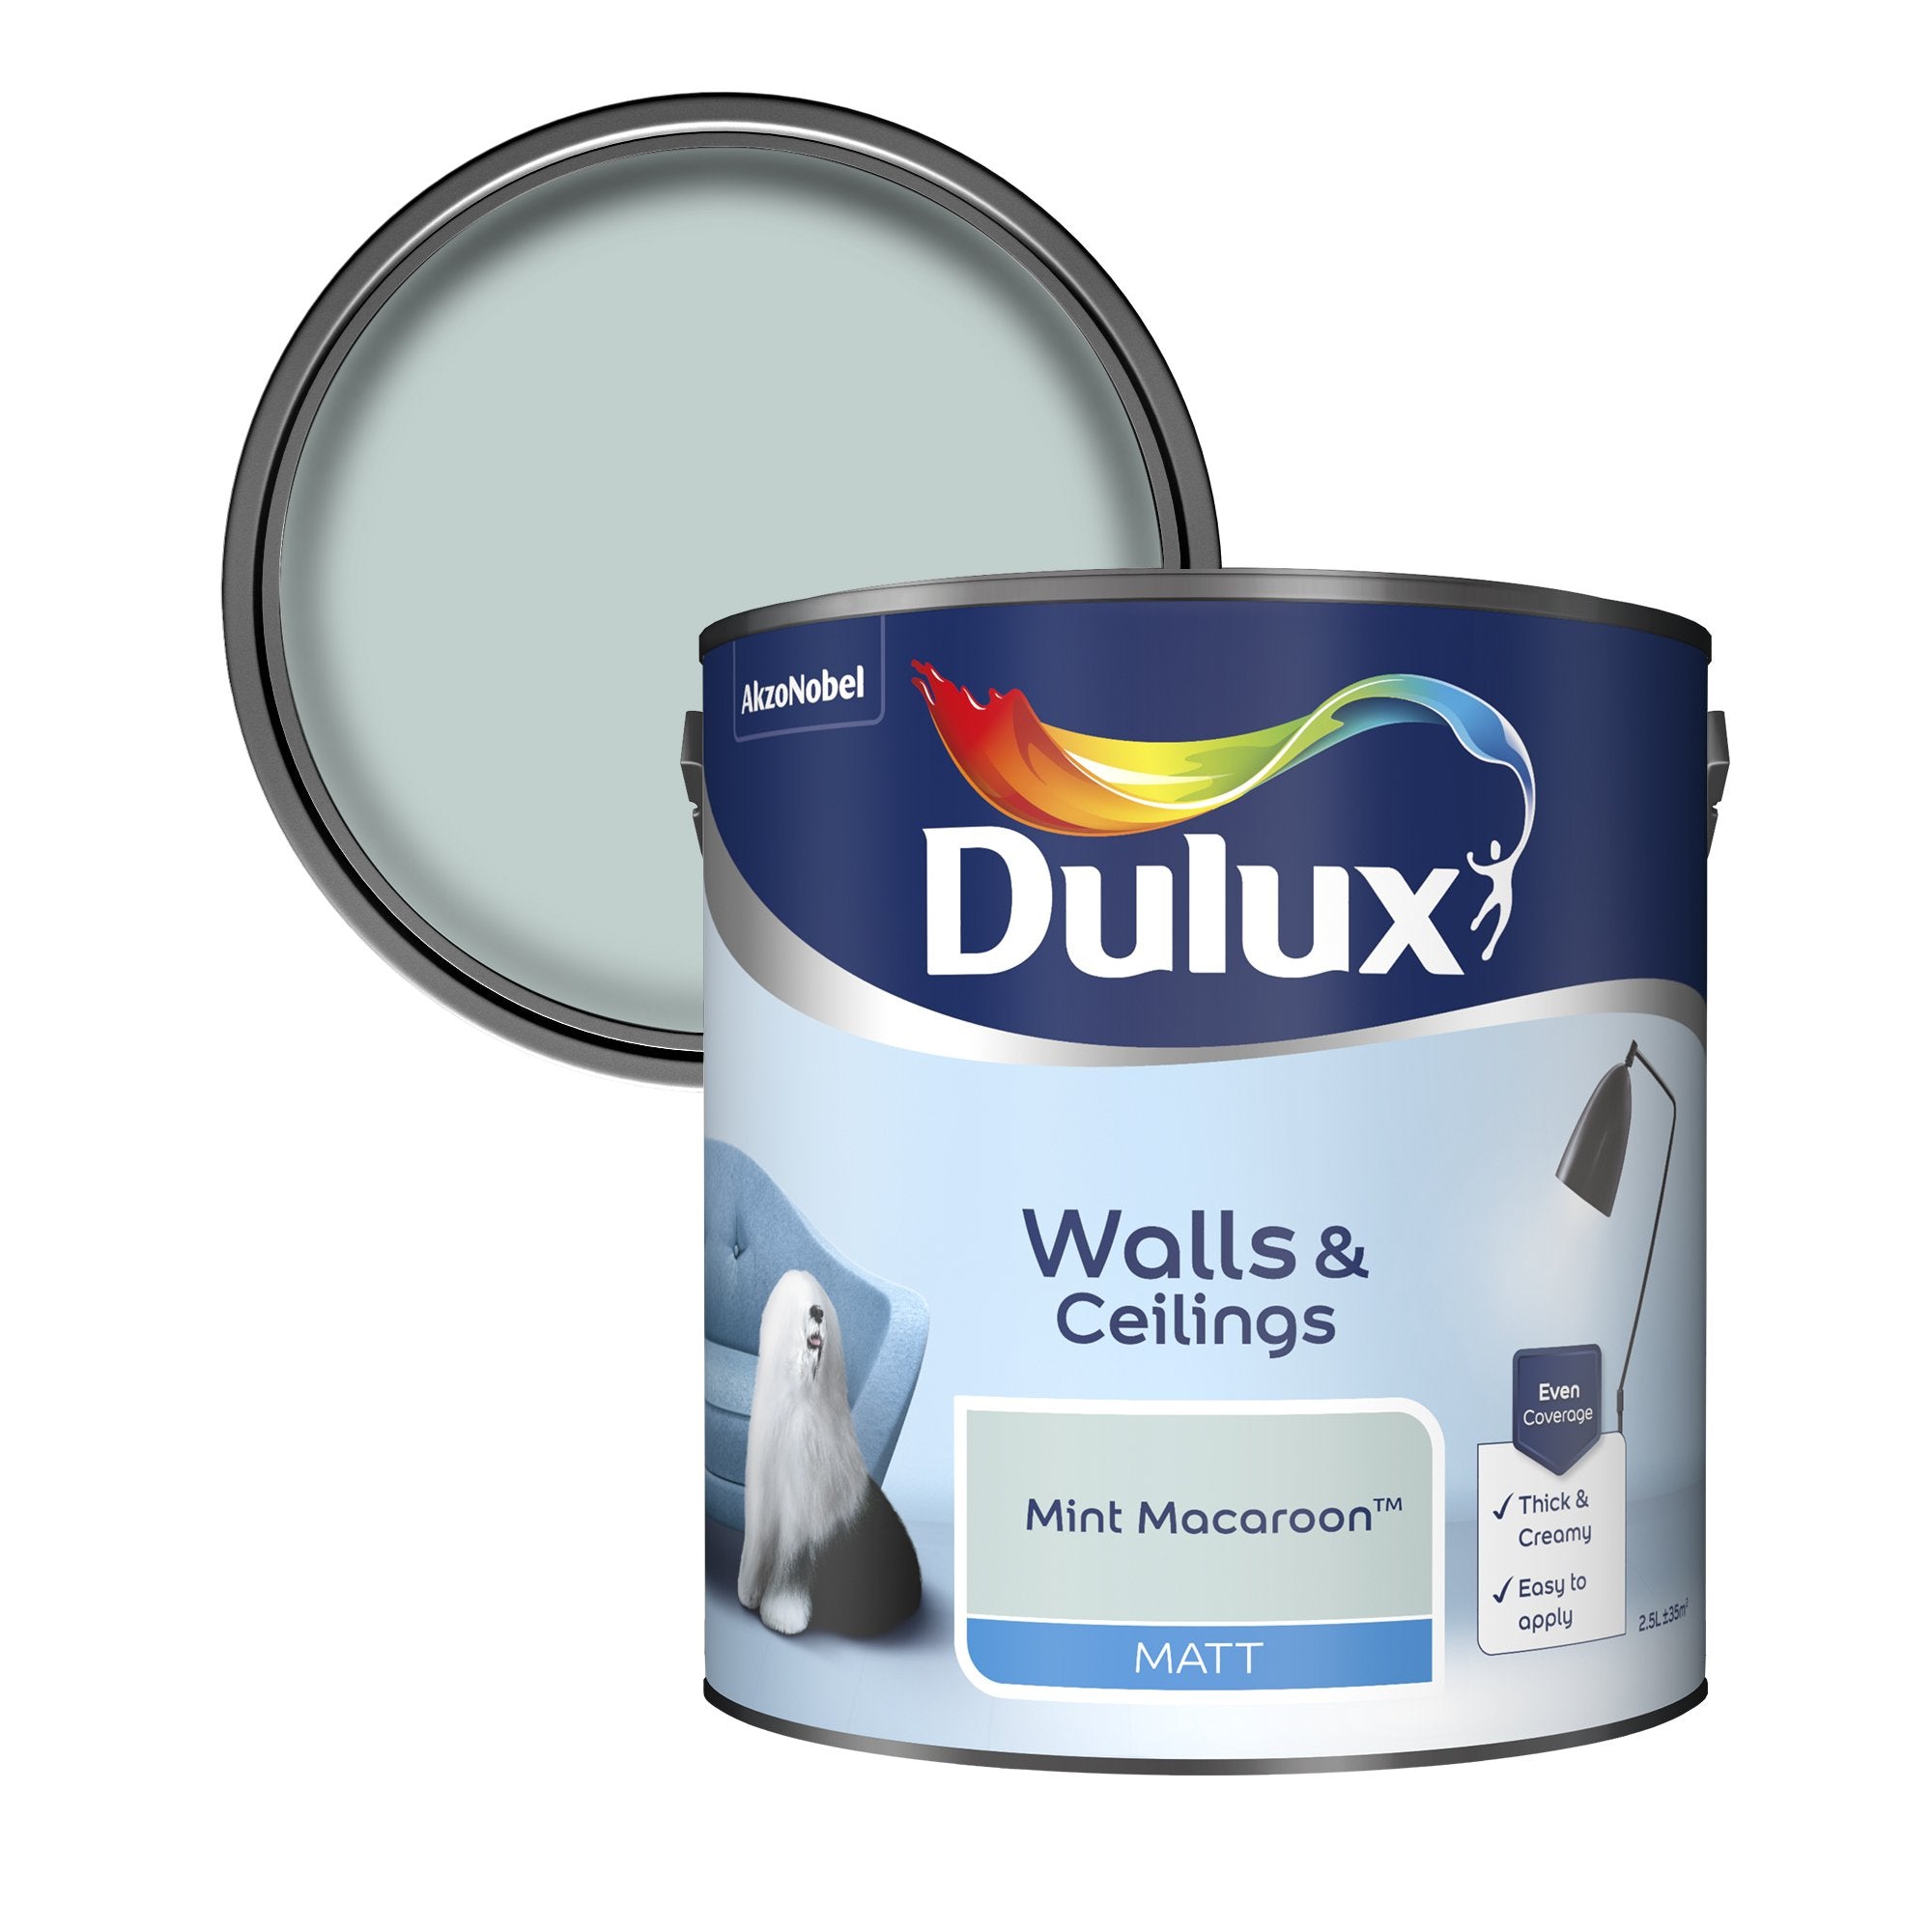 Dulux-Matt-Emulsion-Paint-For-Walls-And-Ceilings-Mint-Macaroon-2.5L